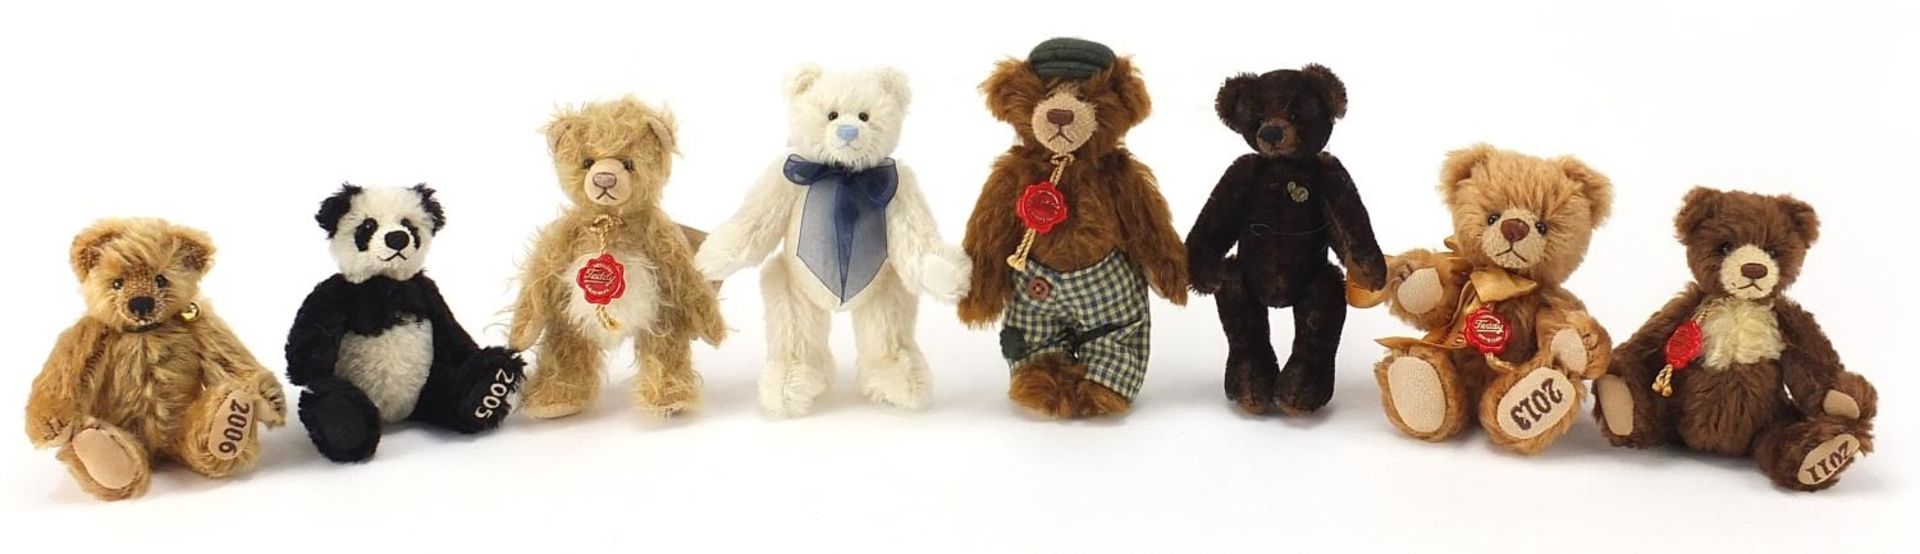 Eight Hermann miniature articulated teddy bears, 2005, 2006, 2007, 2008, 2009, 2011, 2013 and